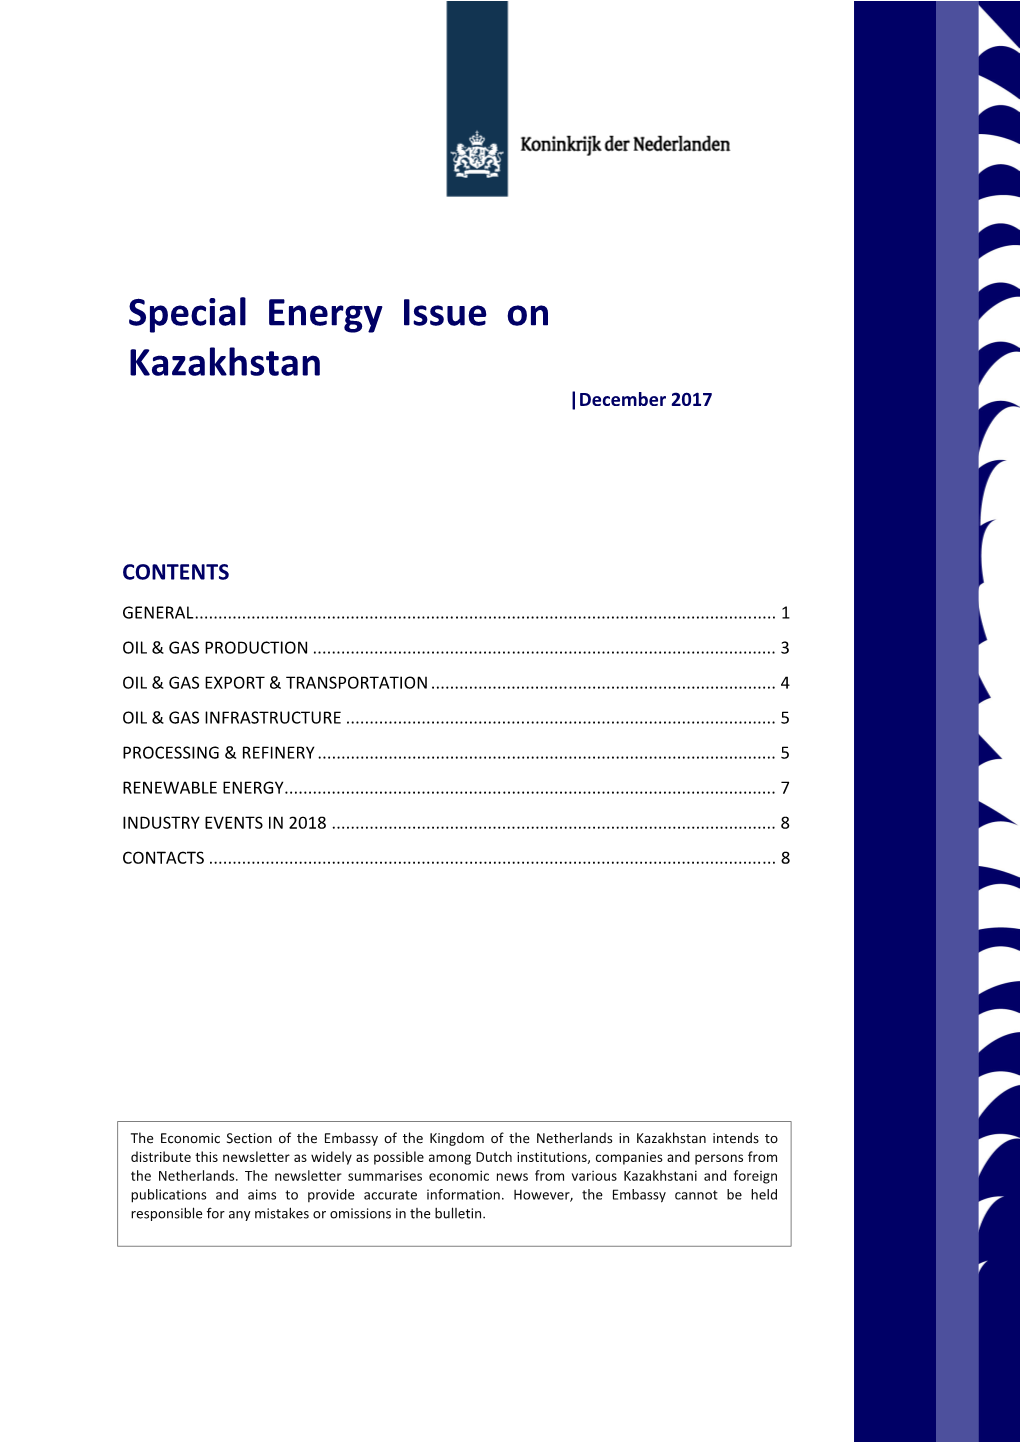 Special Energy Issue on Kazakhstan |December 2017